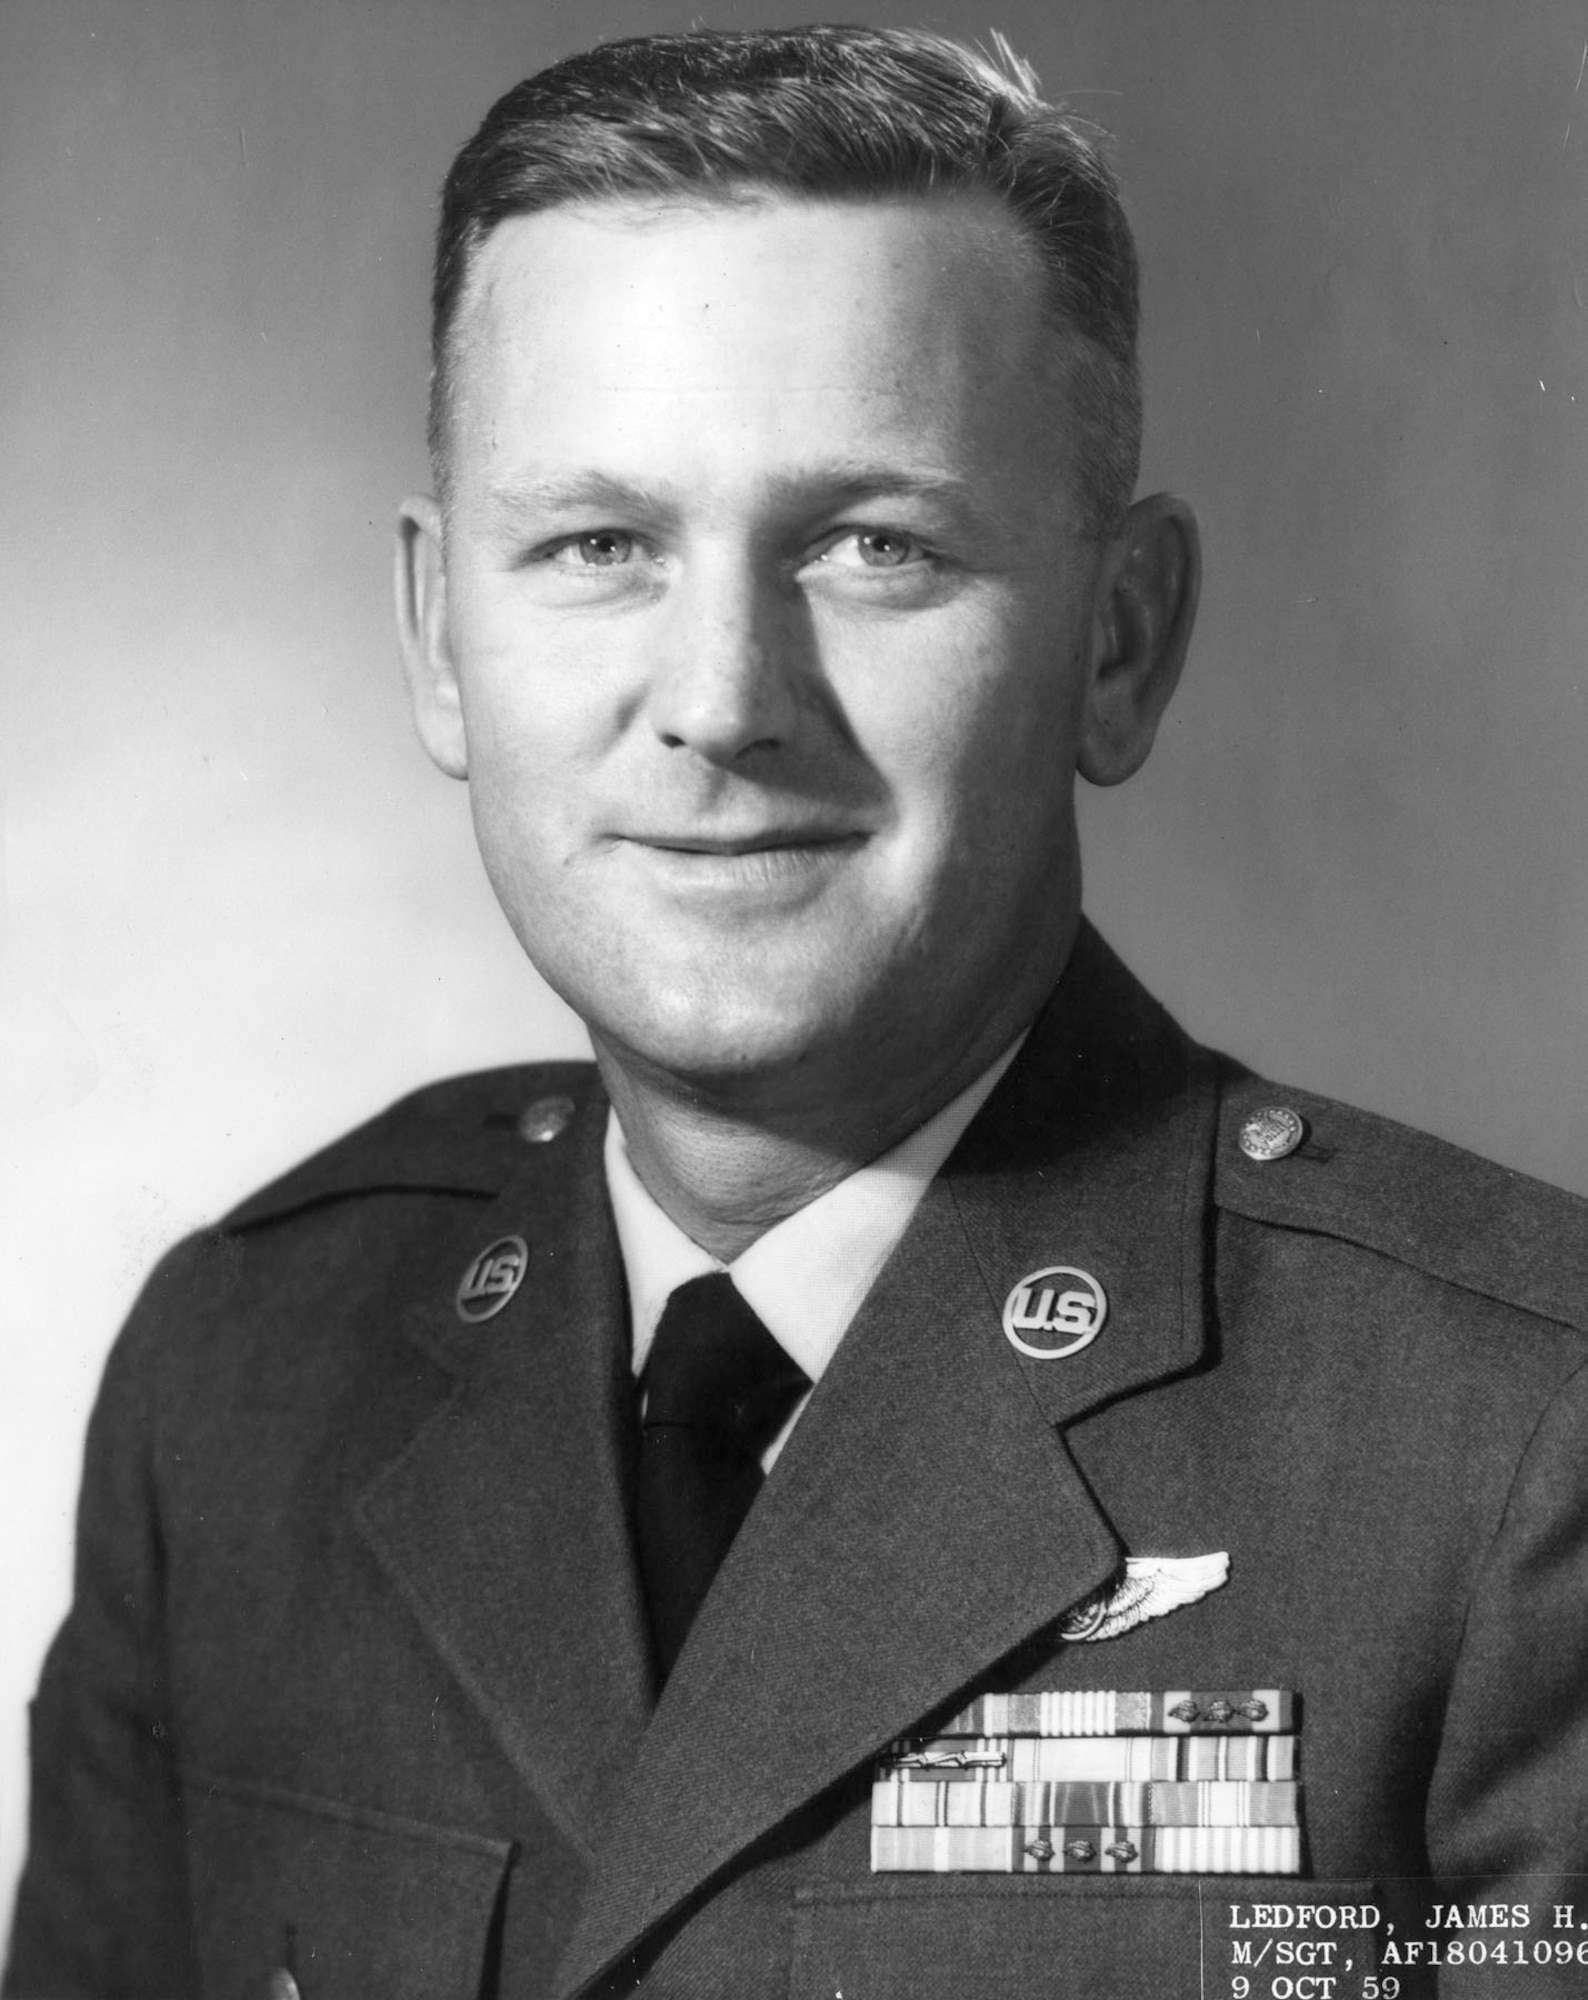 Master Sgt. James H. Ledford in 1959. (U.S. Air Force photo)